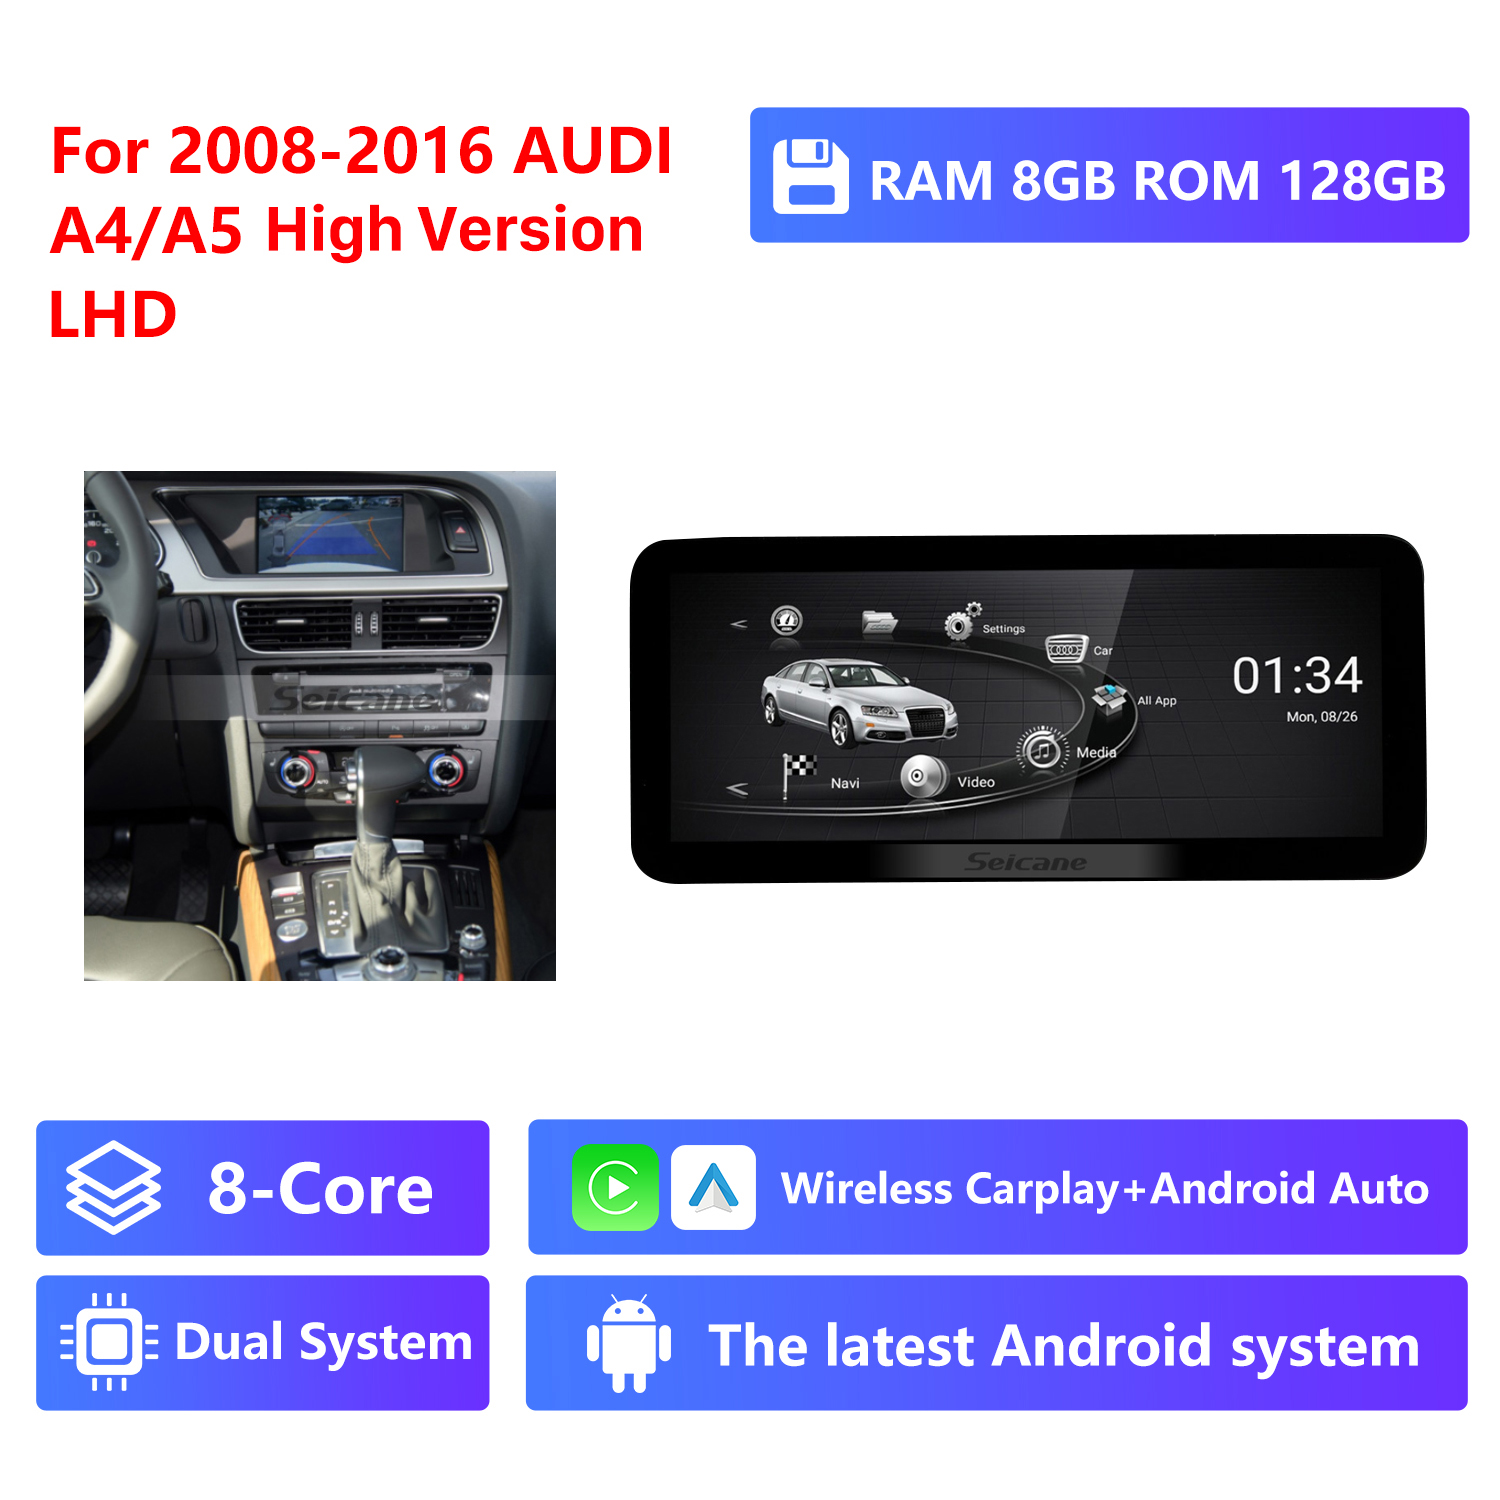 8-Core RAM 8G ROM 128G,2008-2016,High version,LHD